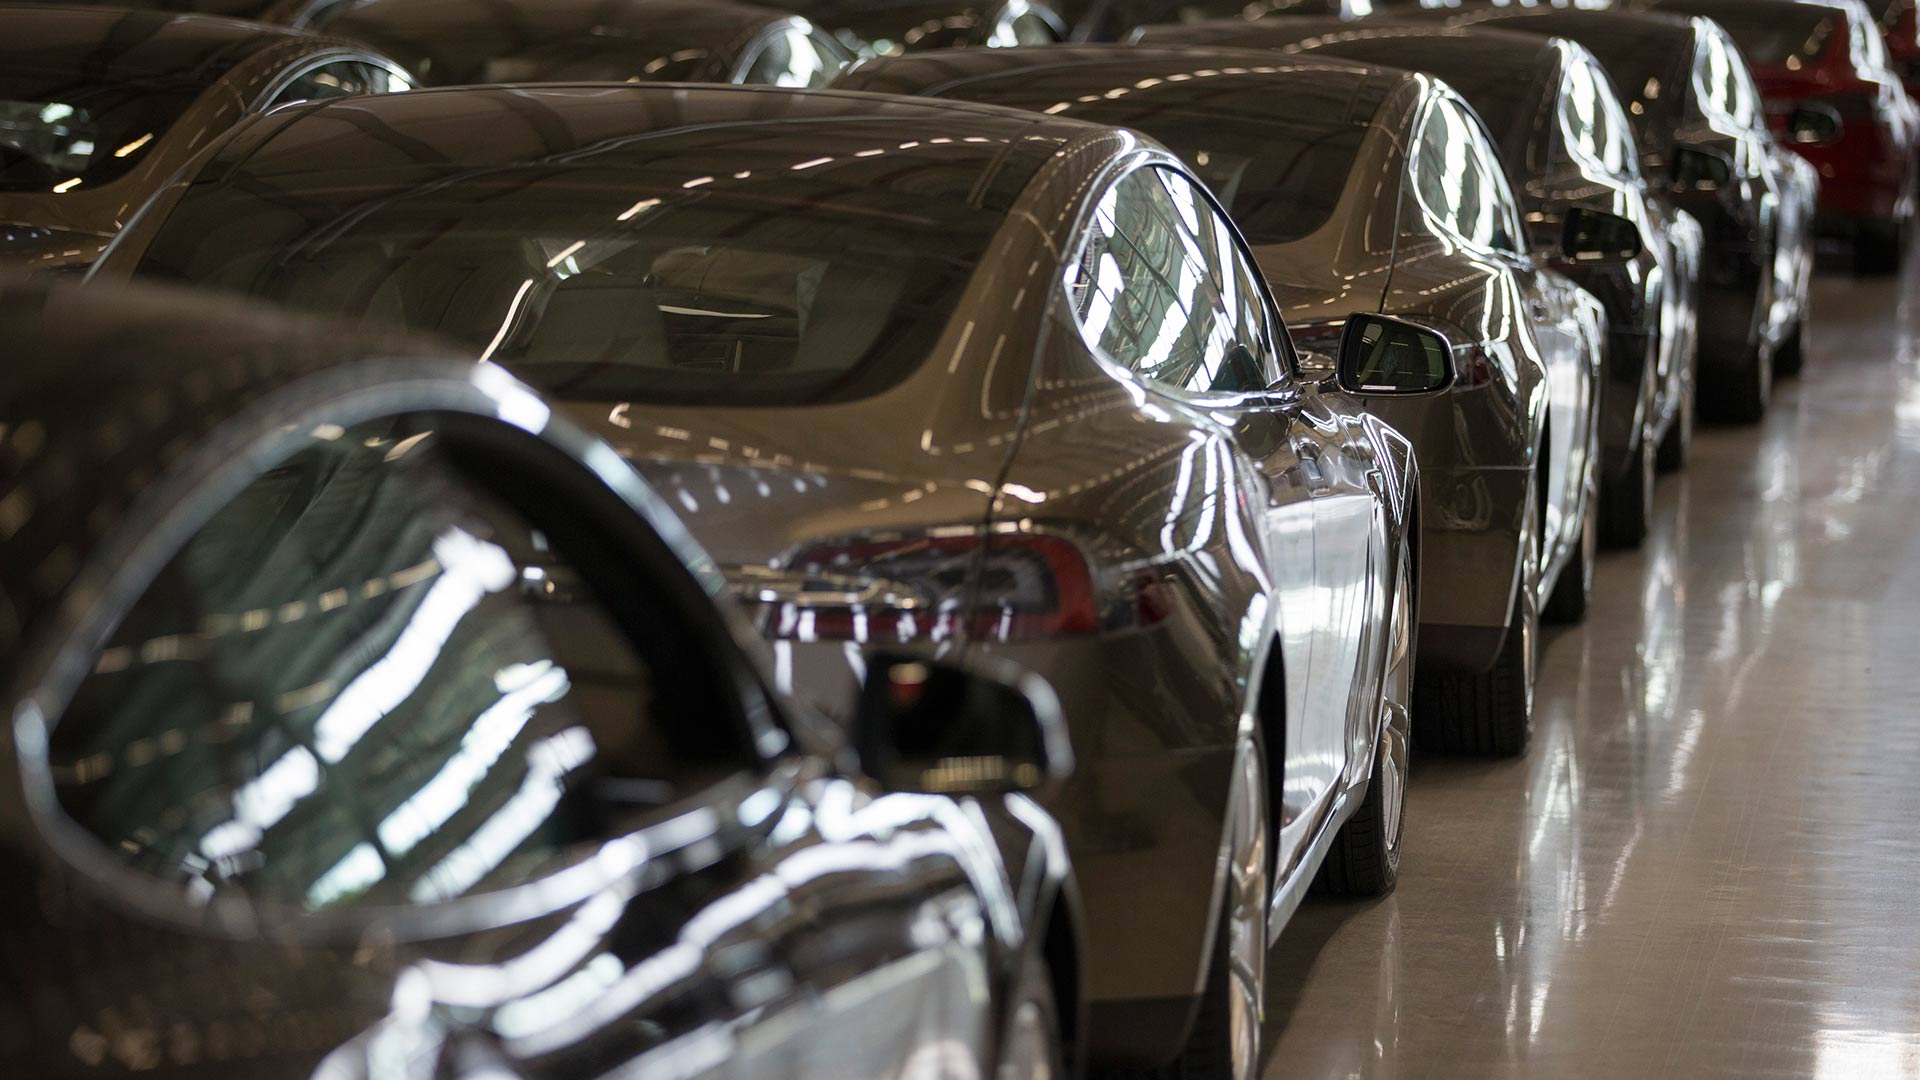 Tesla Sold a Gigafactory’s Worth of Cars Last Quarter - The Drive1920 x 1080